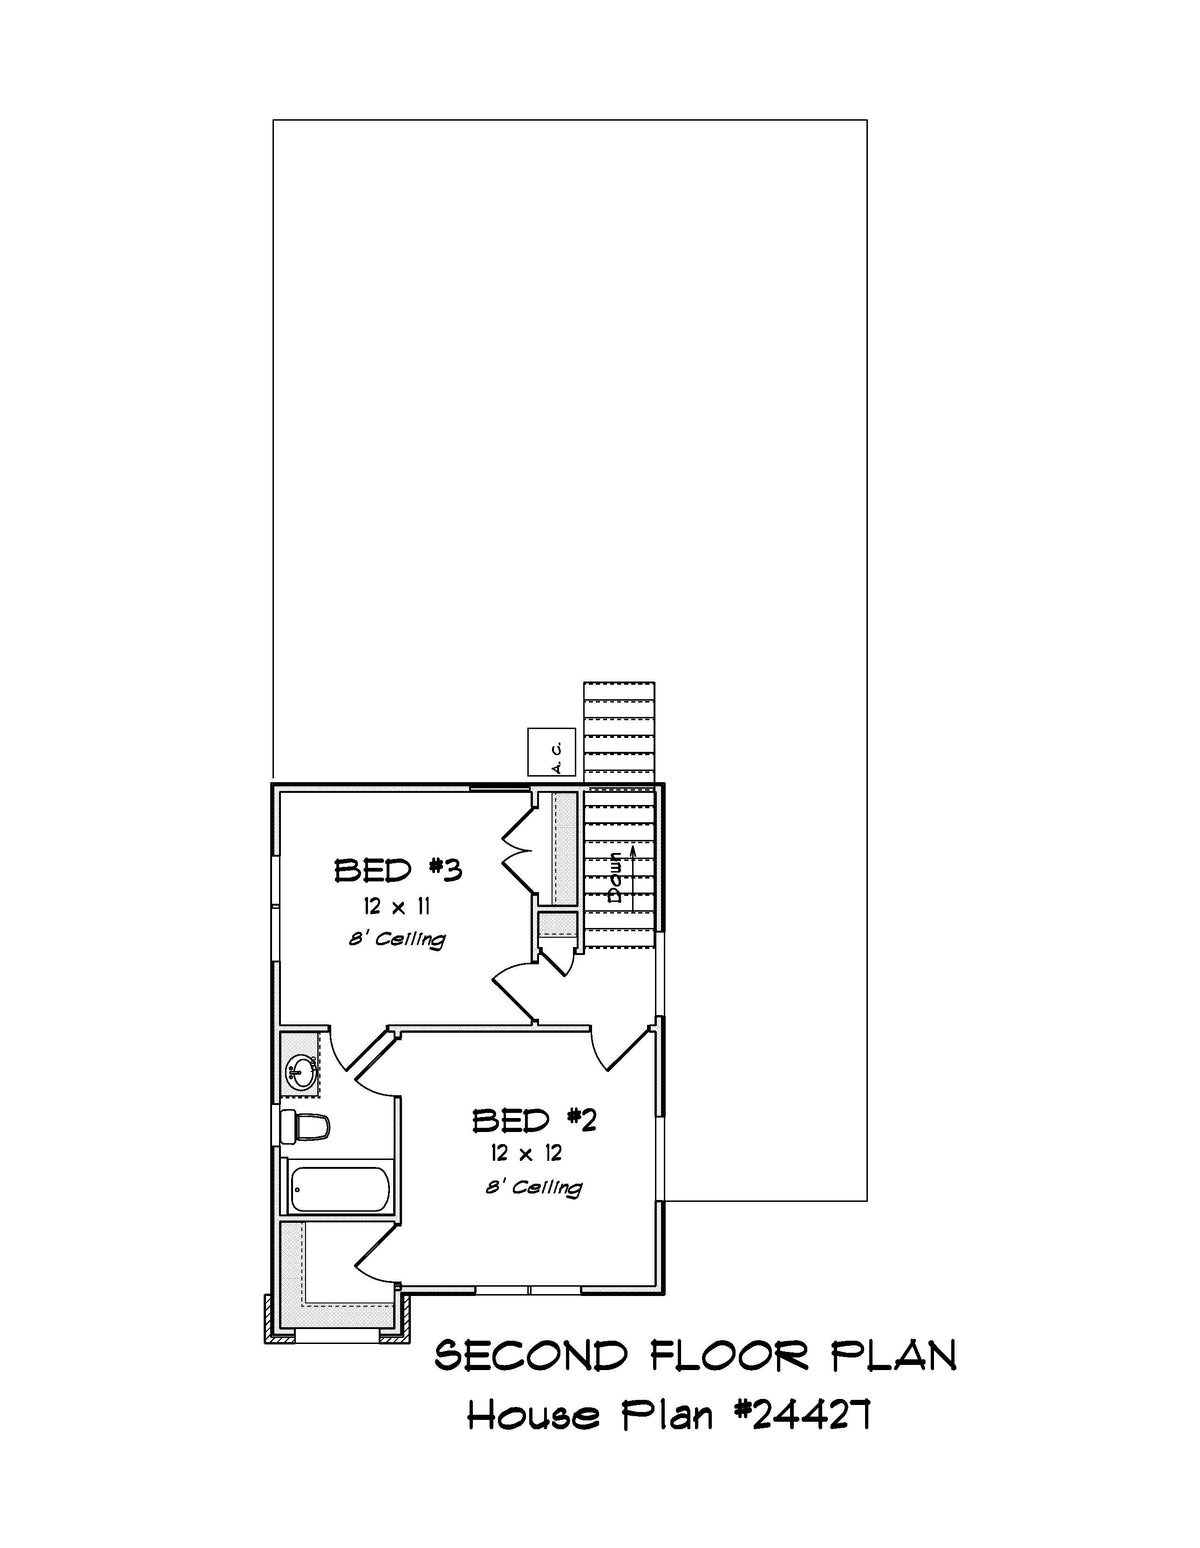 Sycamore Shade Second Floor Plan